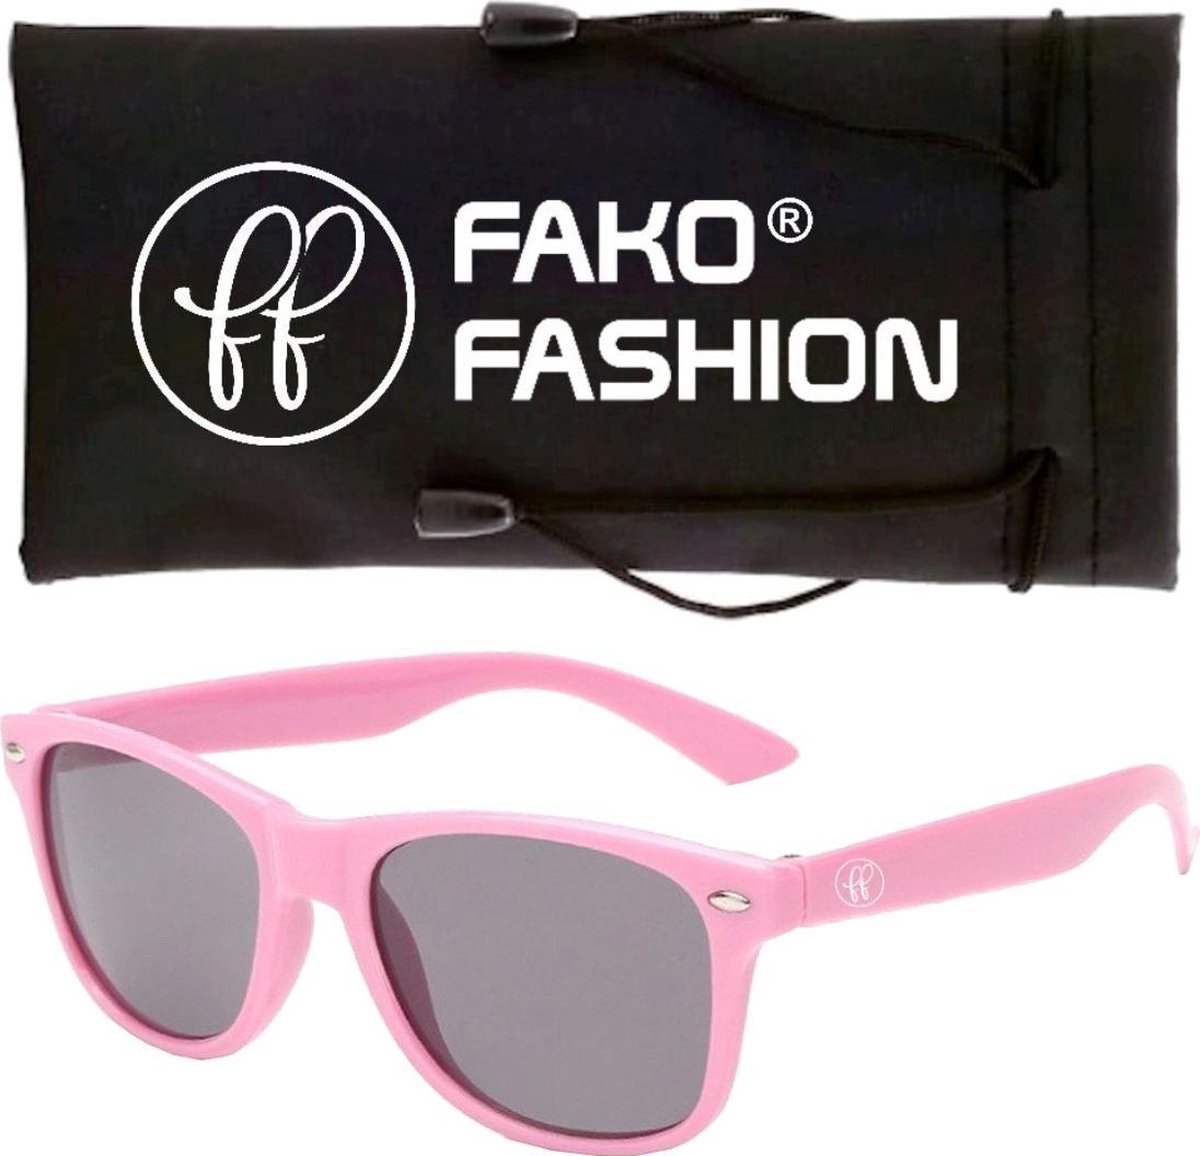 Fako Fashion® - Zonnebril - Classic - Roze